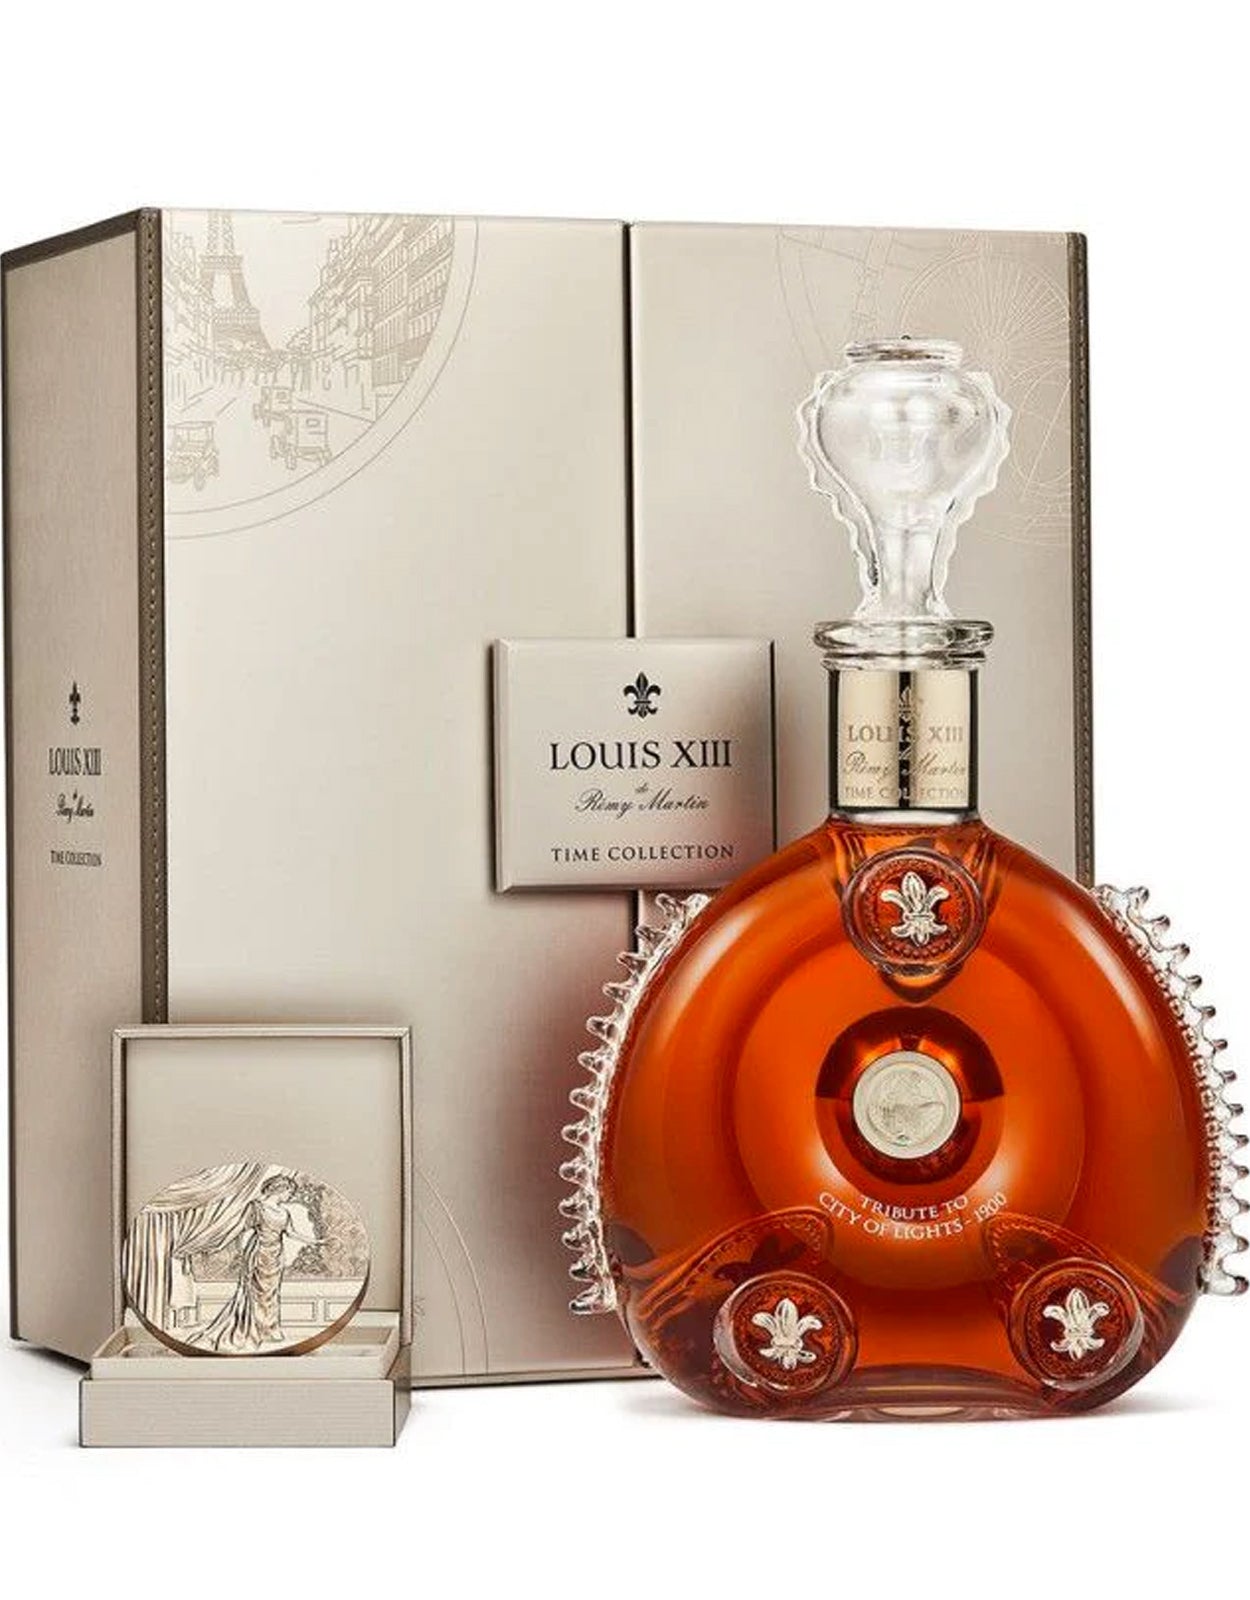 Louis XIII de Remy Martin - Kingdom Liquors